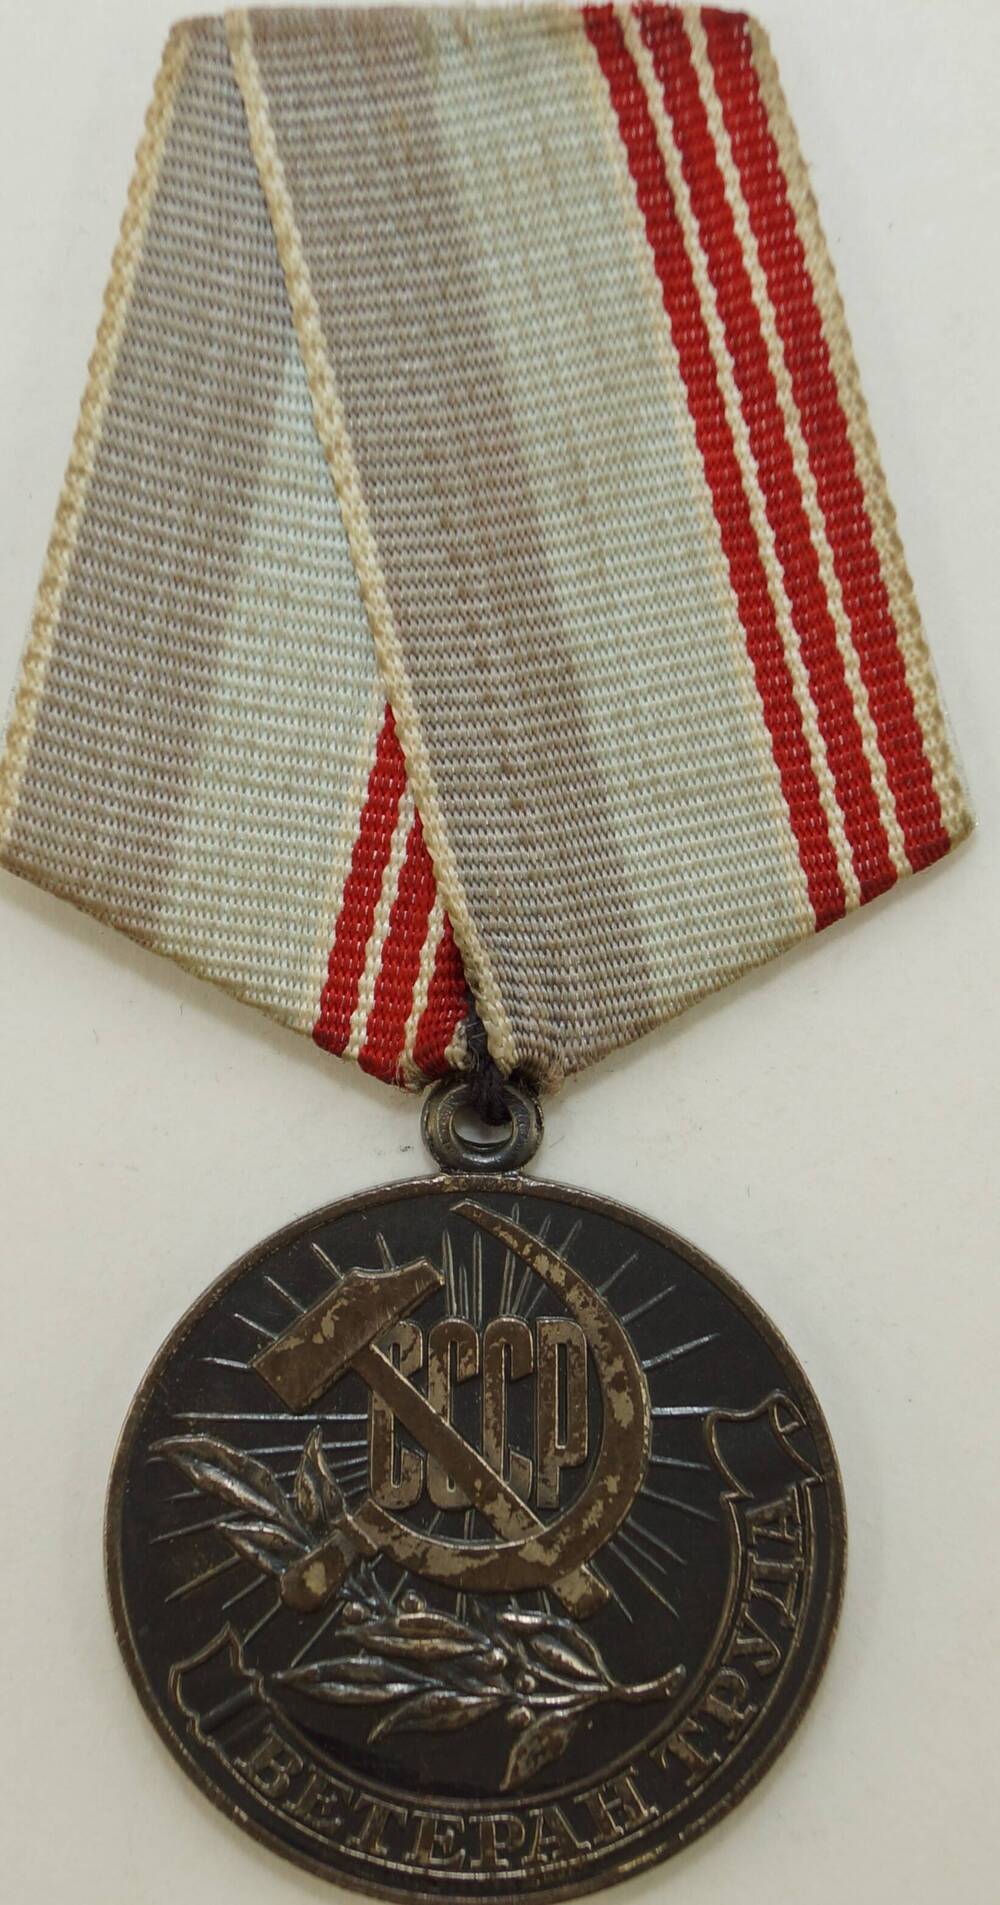 Медаль «Ветеран труда» Дериглазова  Ивана Андреевича.